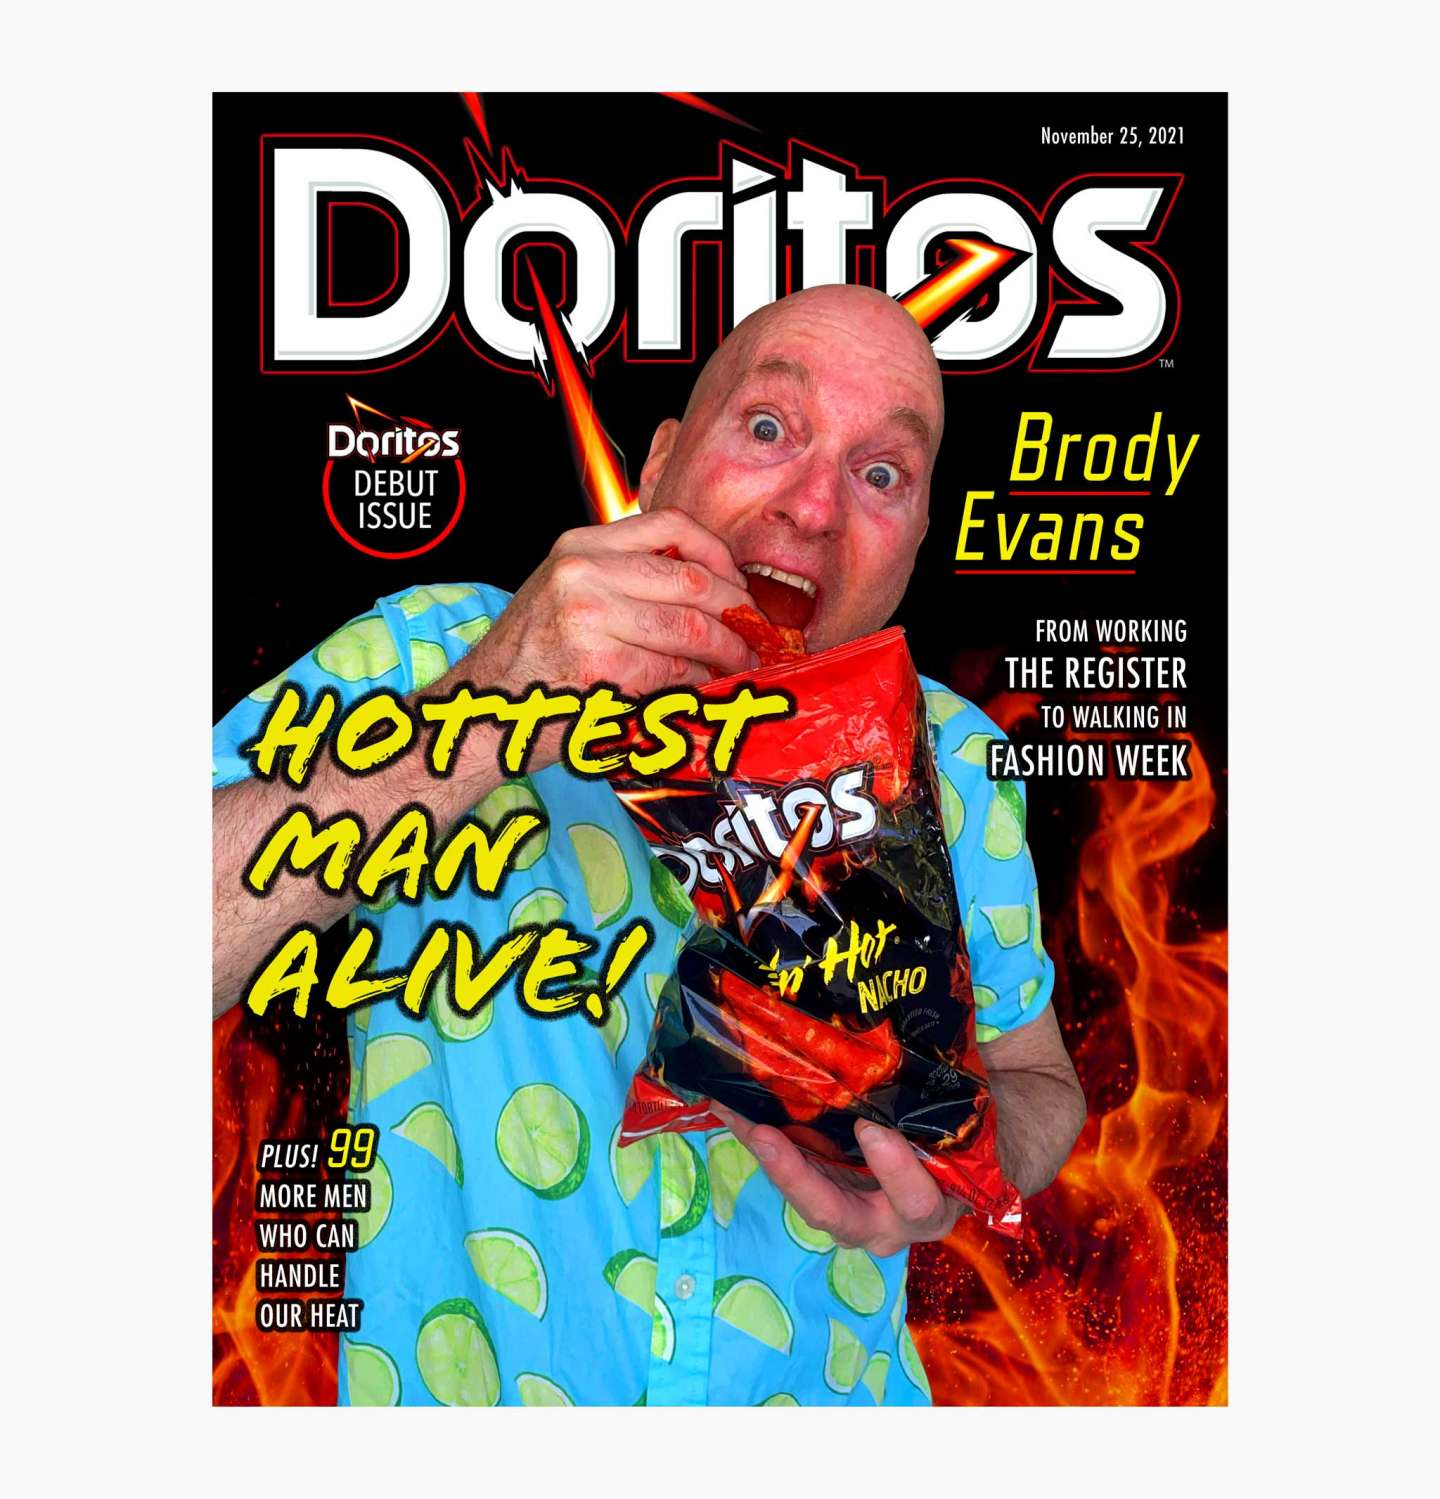 Doritos Hottest Man Alive!